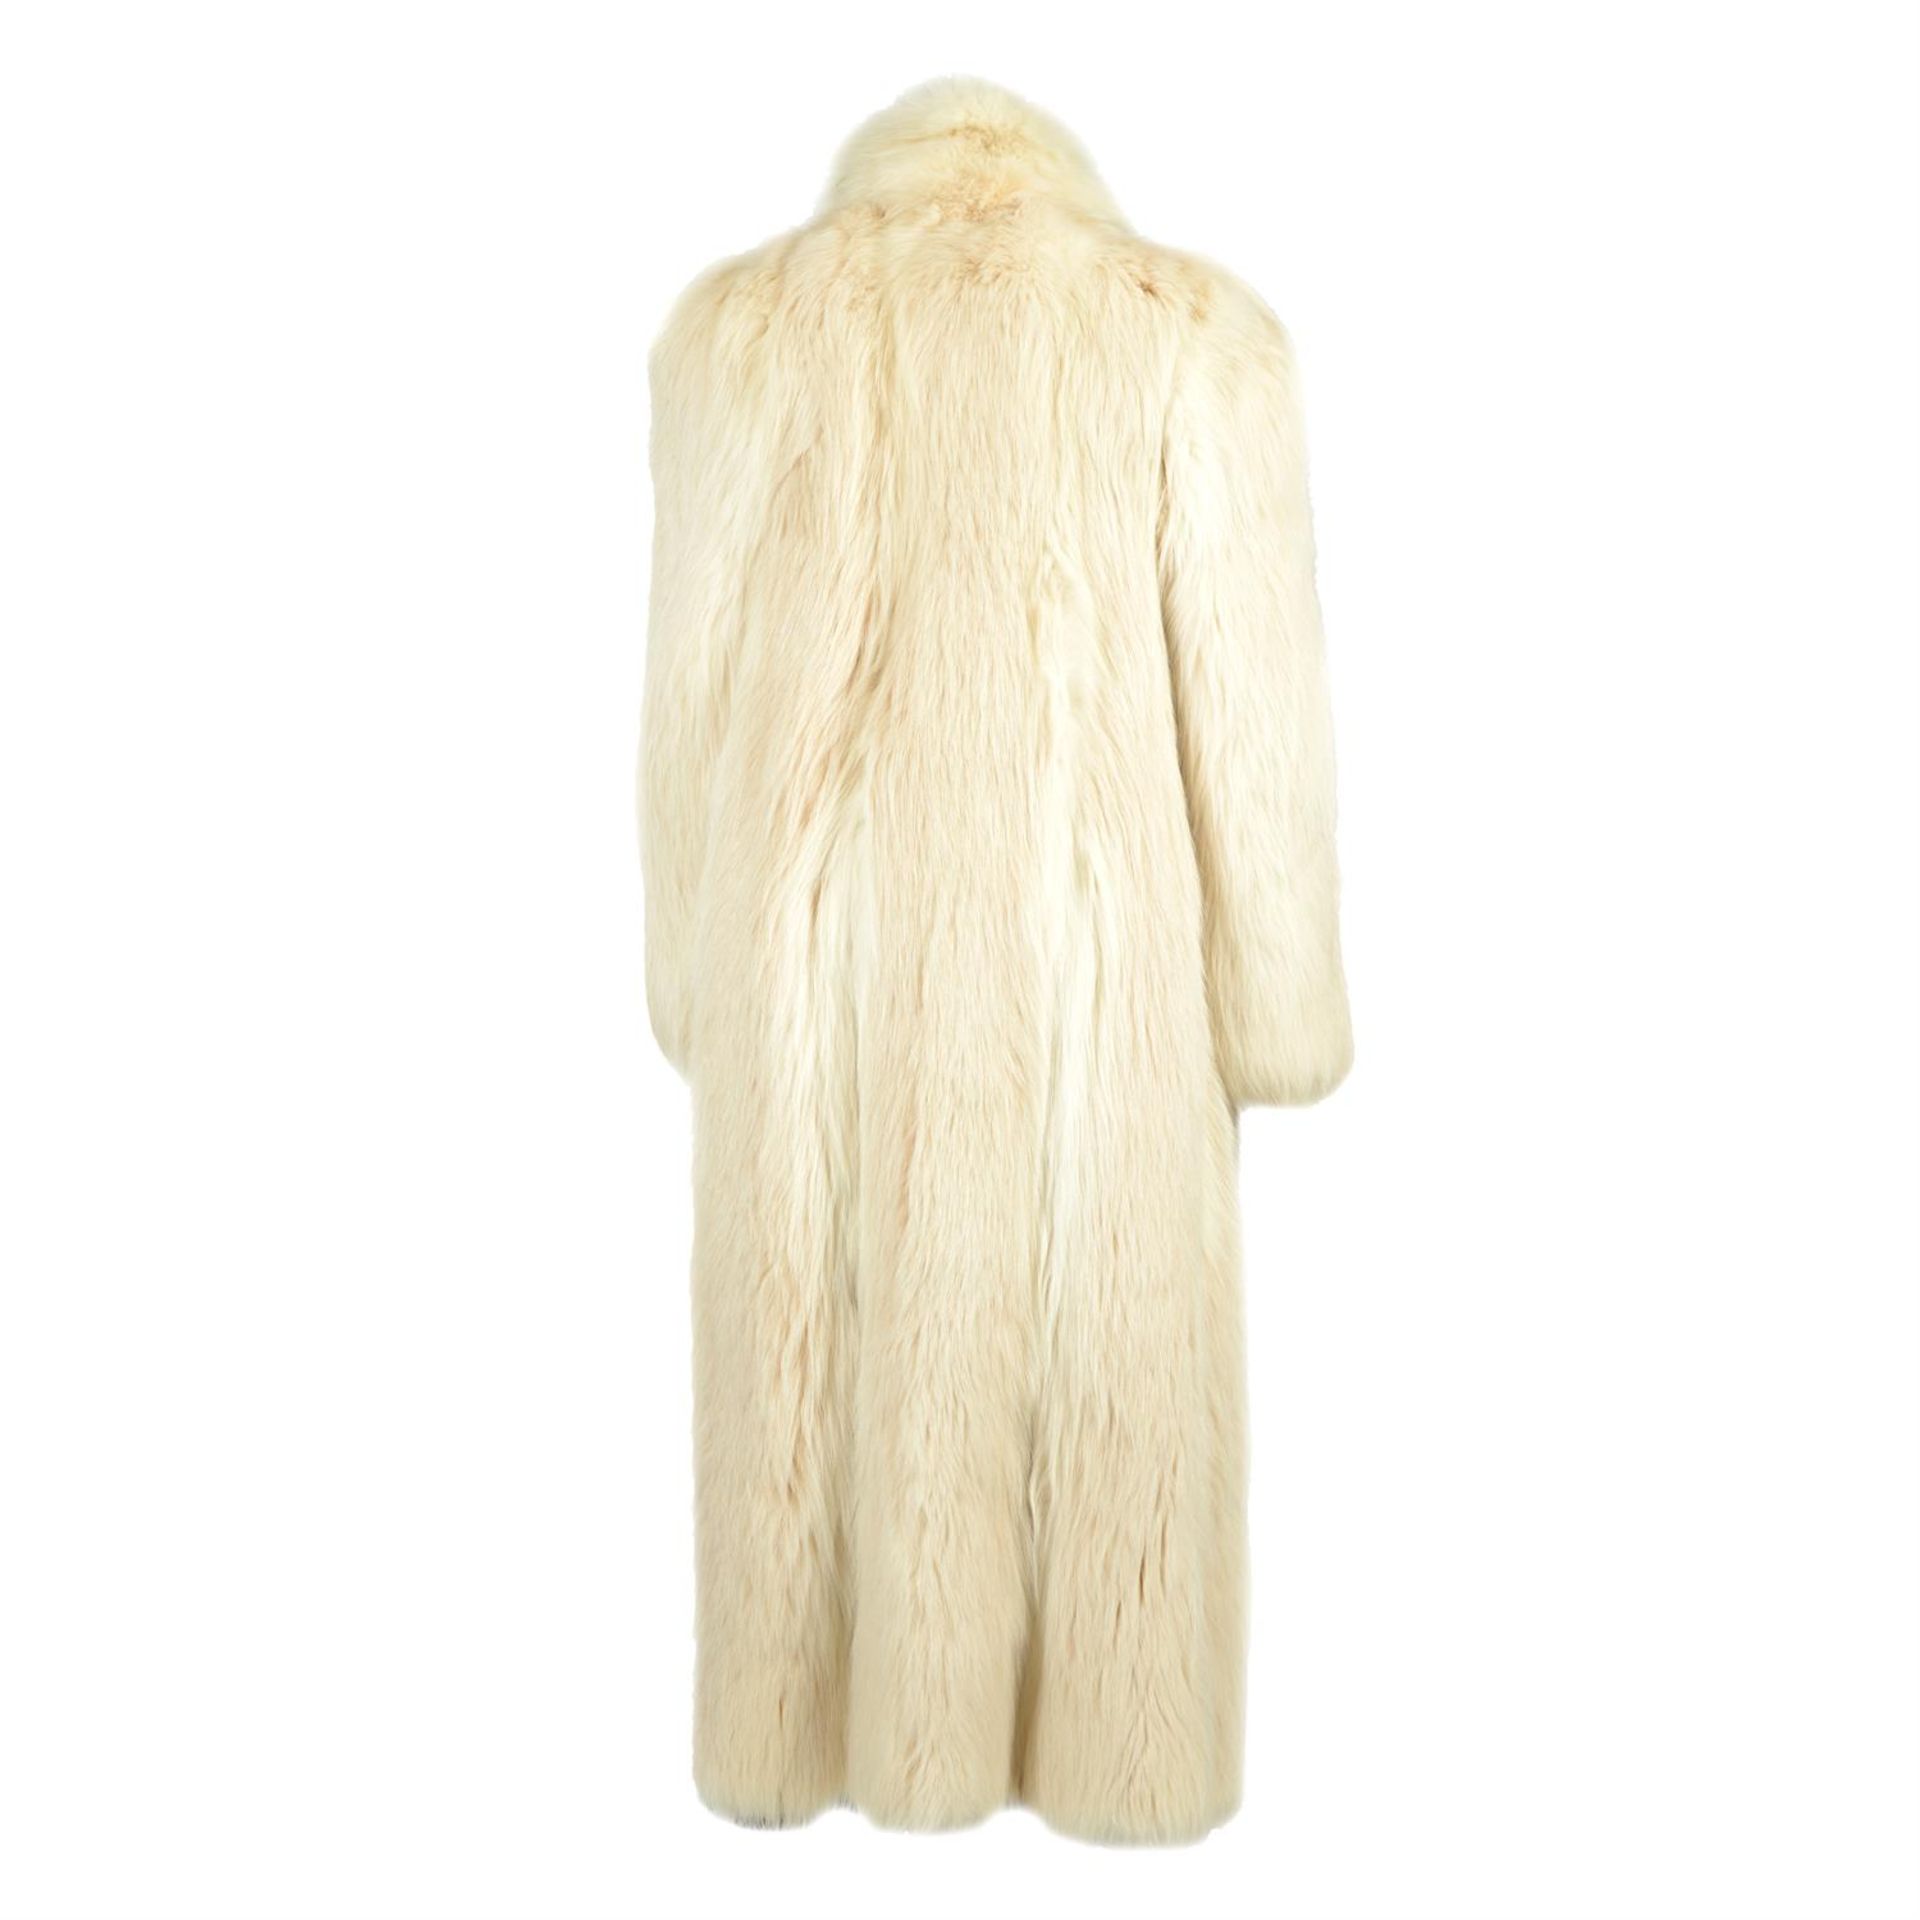 A Phillip Hockley Fur coat. - Image 2 of 2